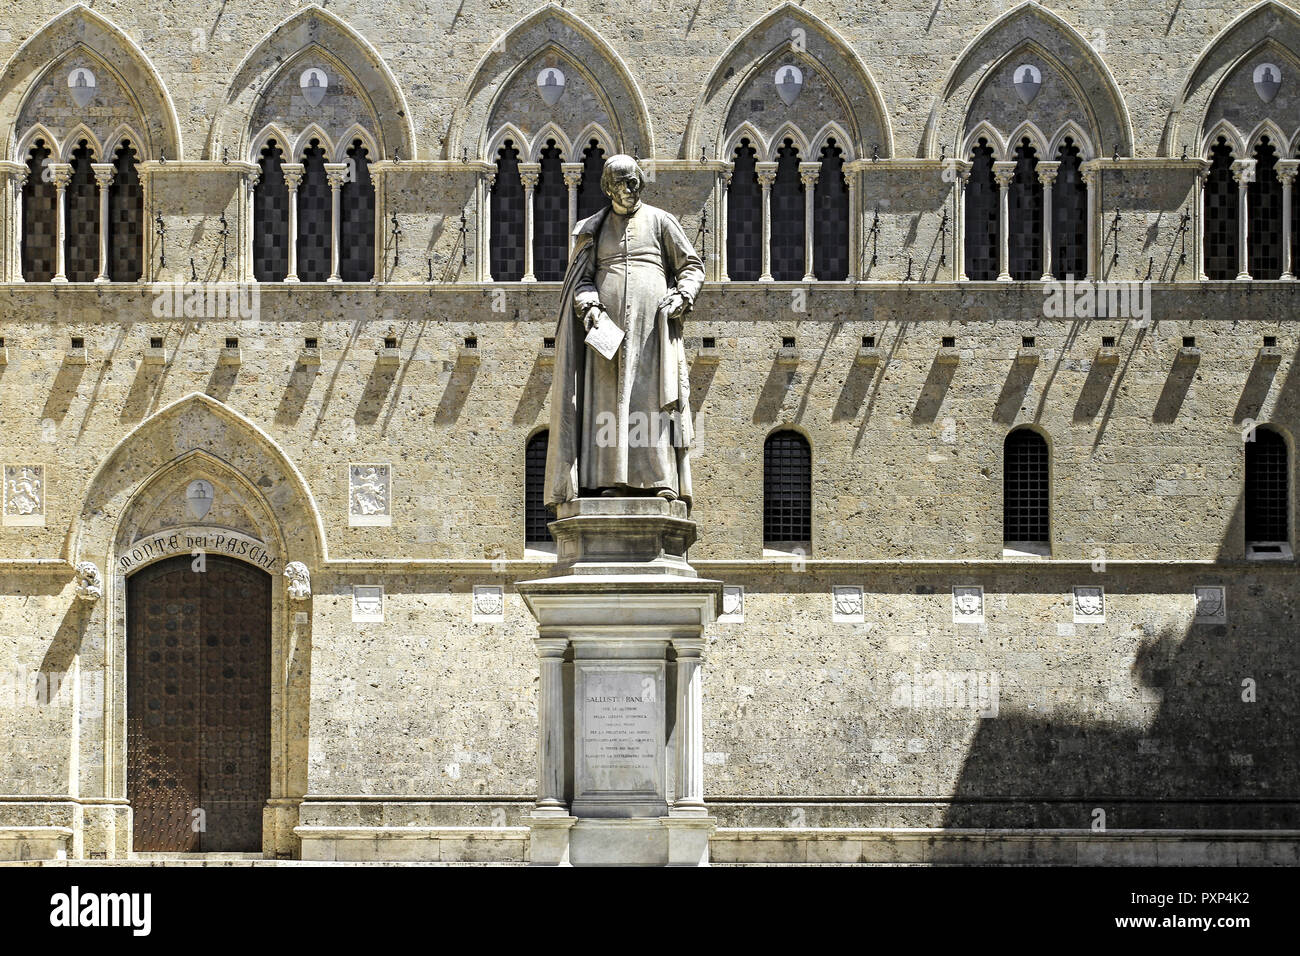 Italien, Toskana, Siena, Banca Monte dei Paschi di Siena, Palazzo Salimbeni mit Statue des Kanonikers Sallustion Bandini, Italy, Tuscany, Palazzo Sali Stock Photo